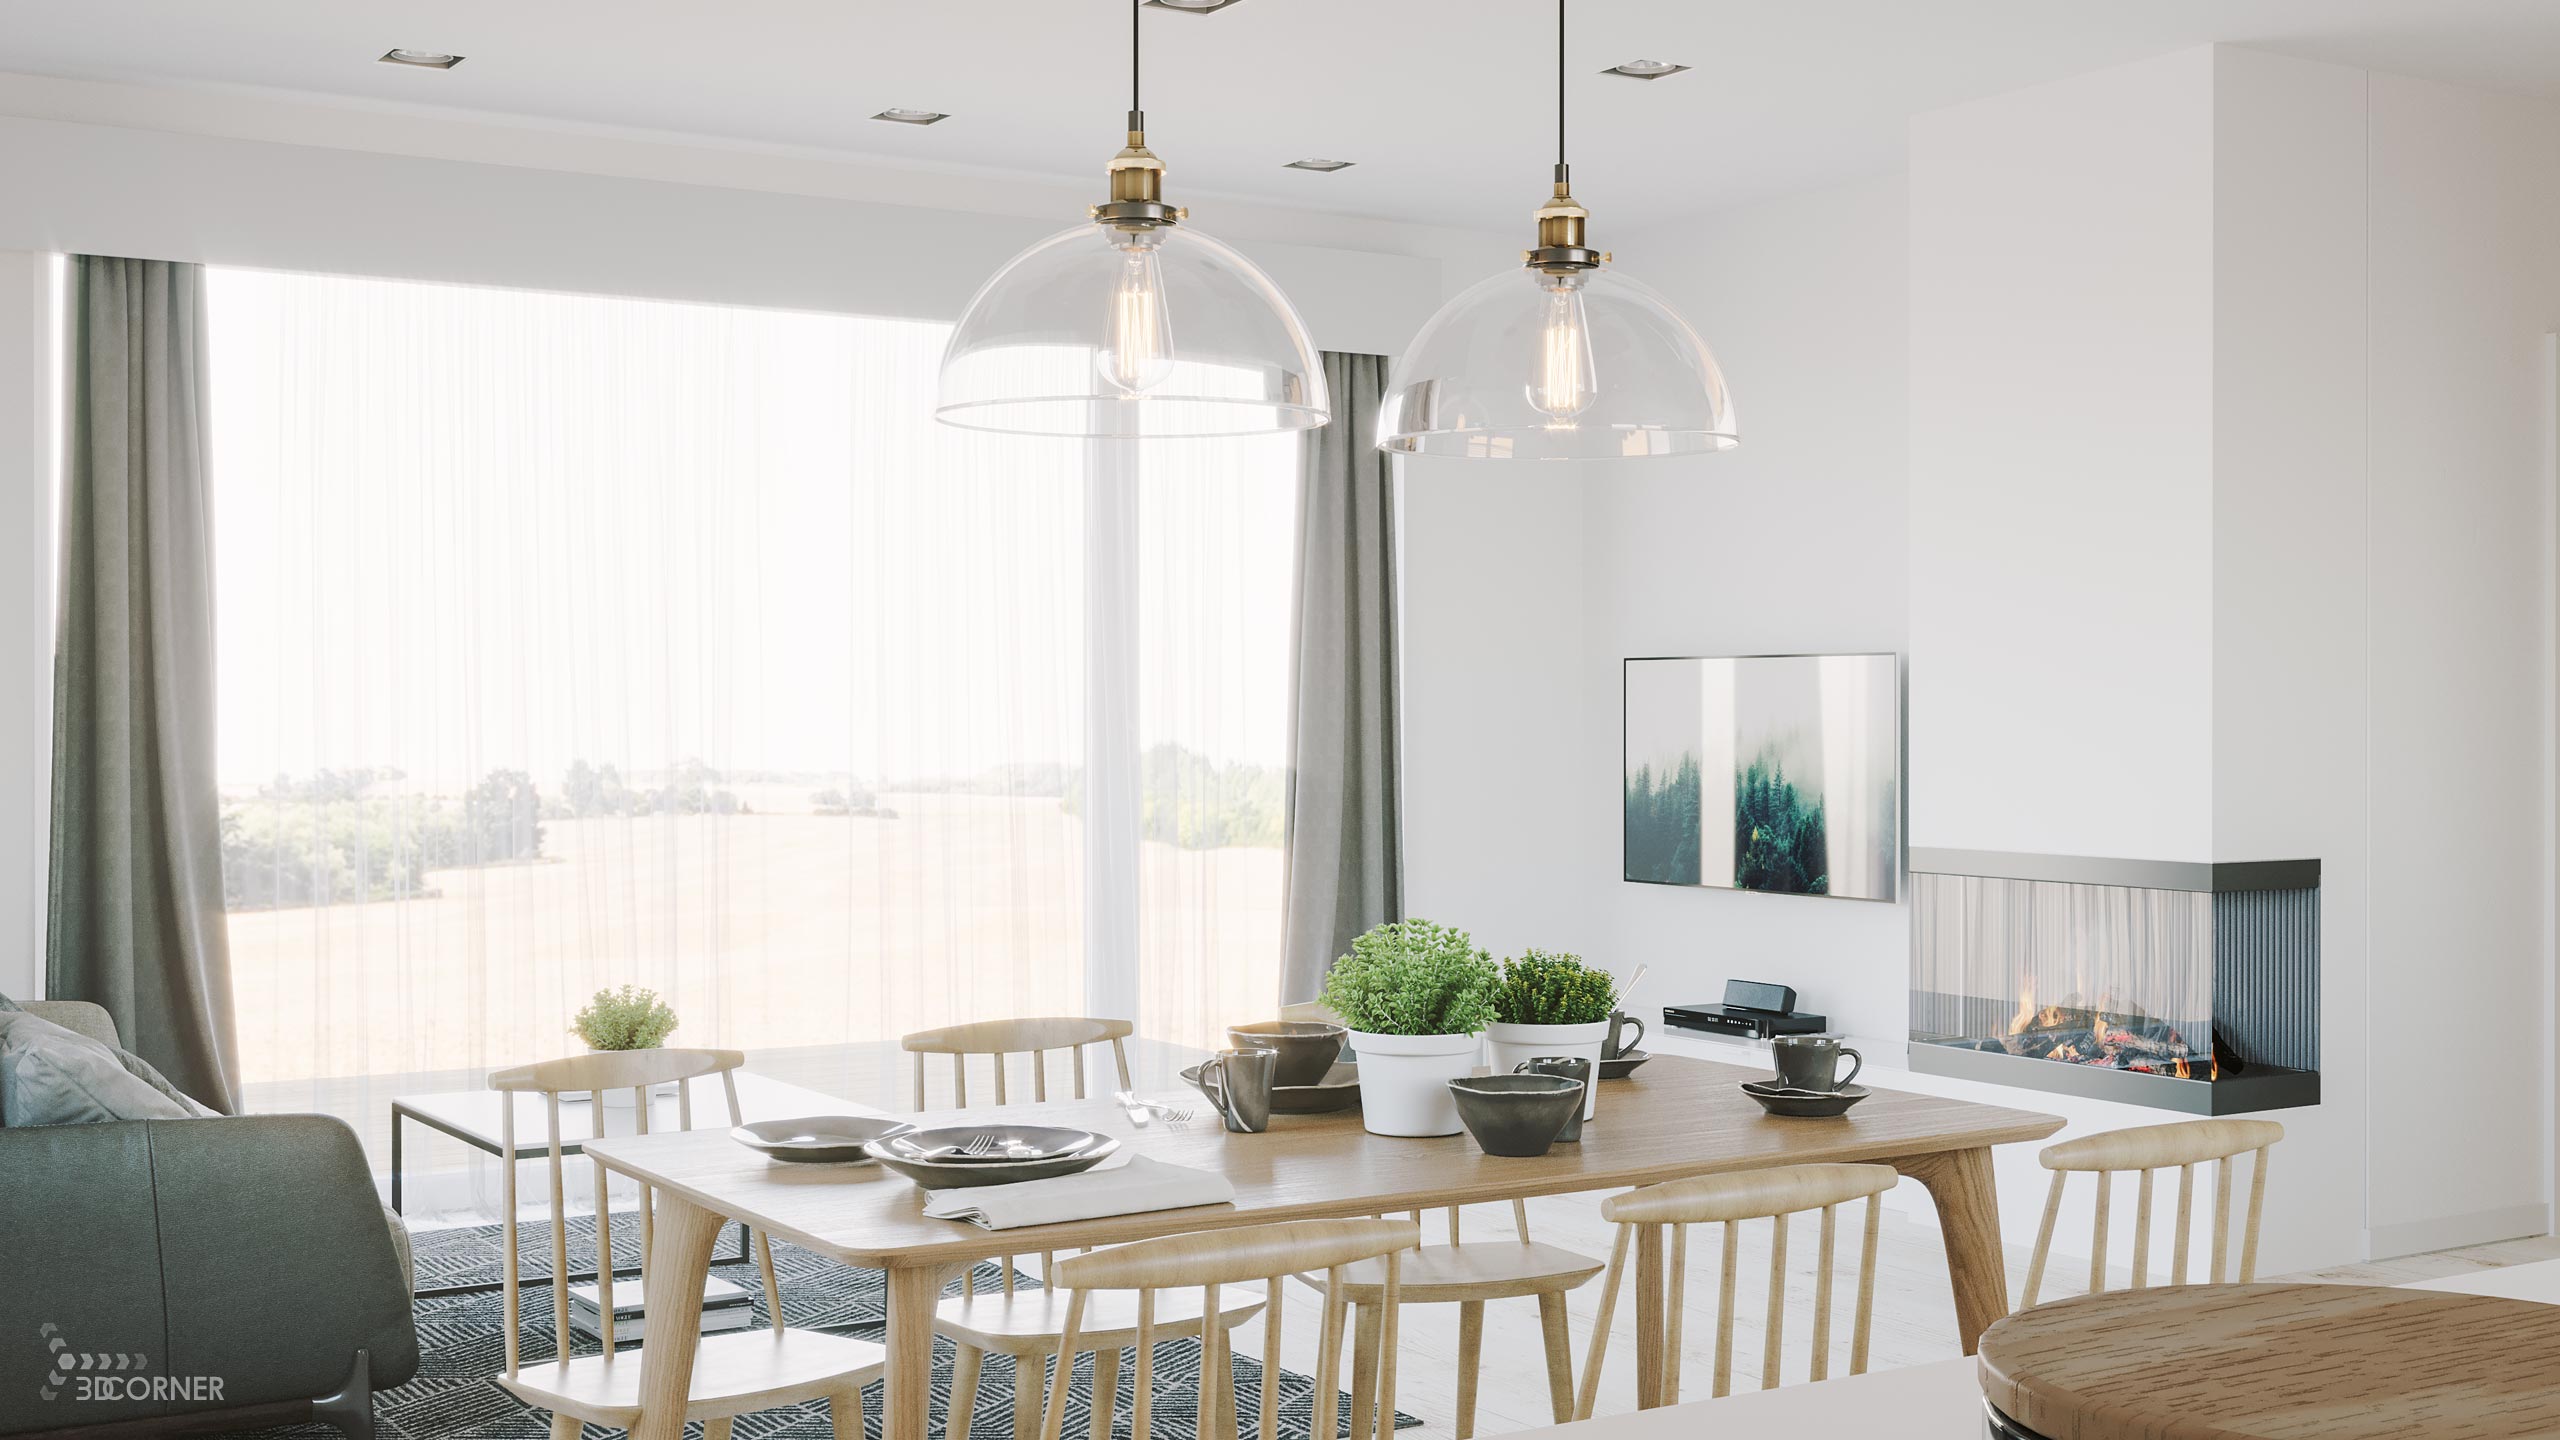 visualization interior photorealistic modern architecture apartment dinning 3dcorner